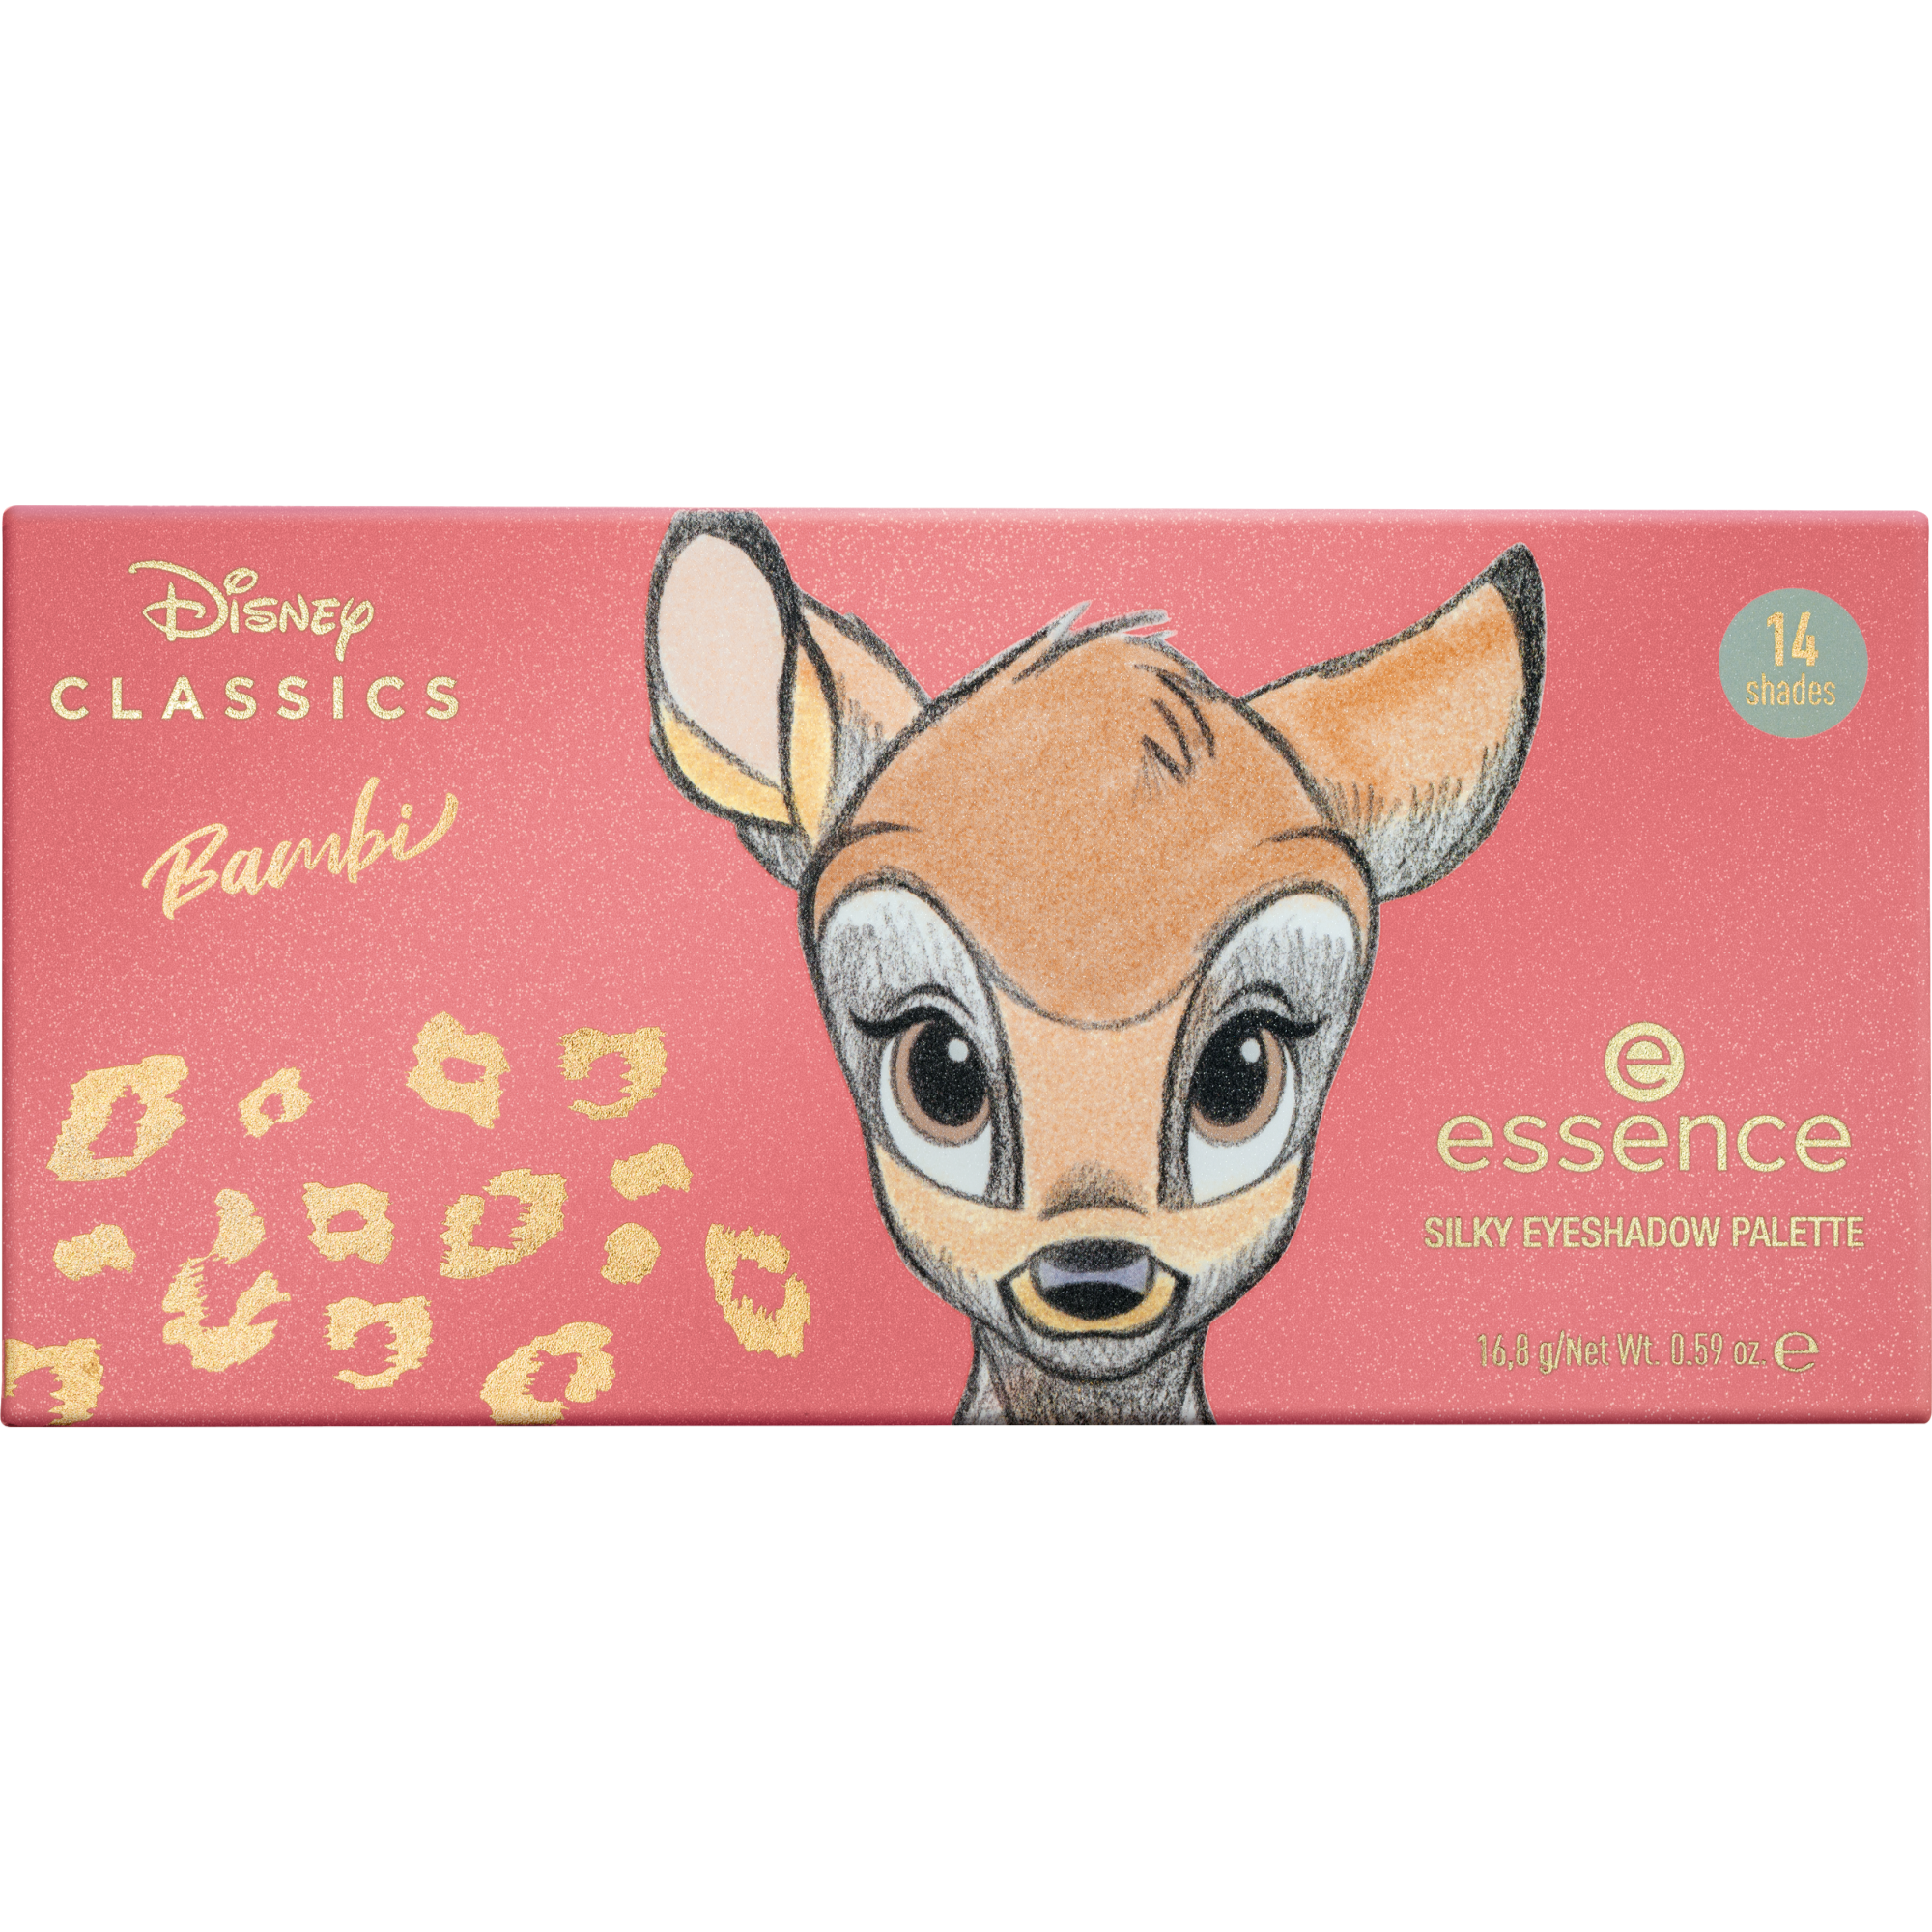 Disney Classics Bambi silky eyeshadow palette